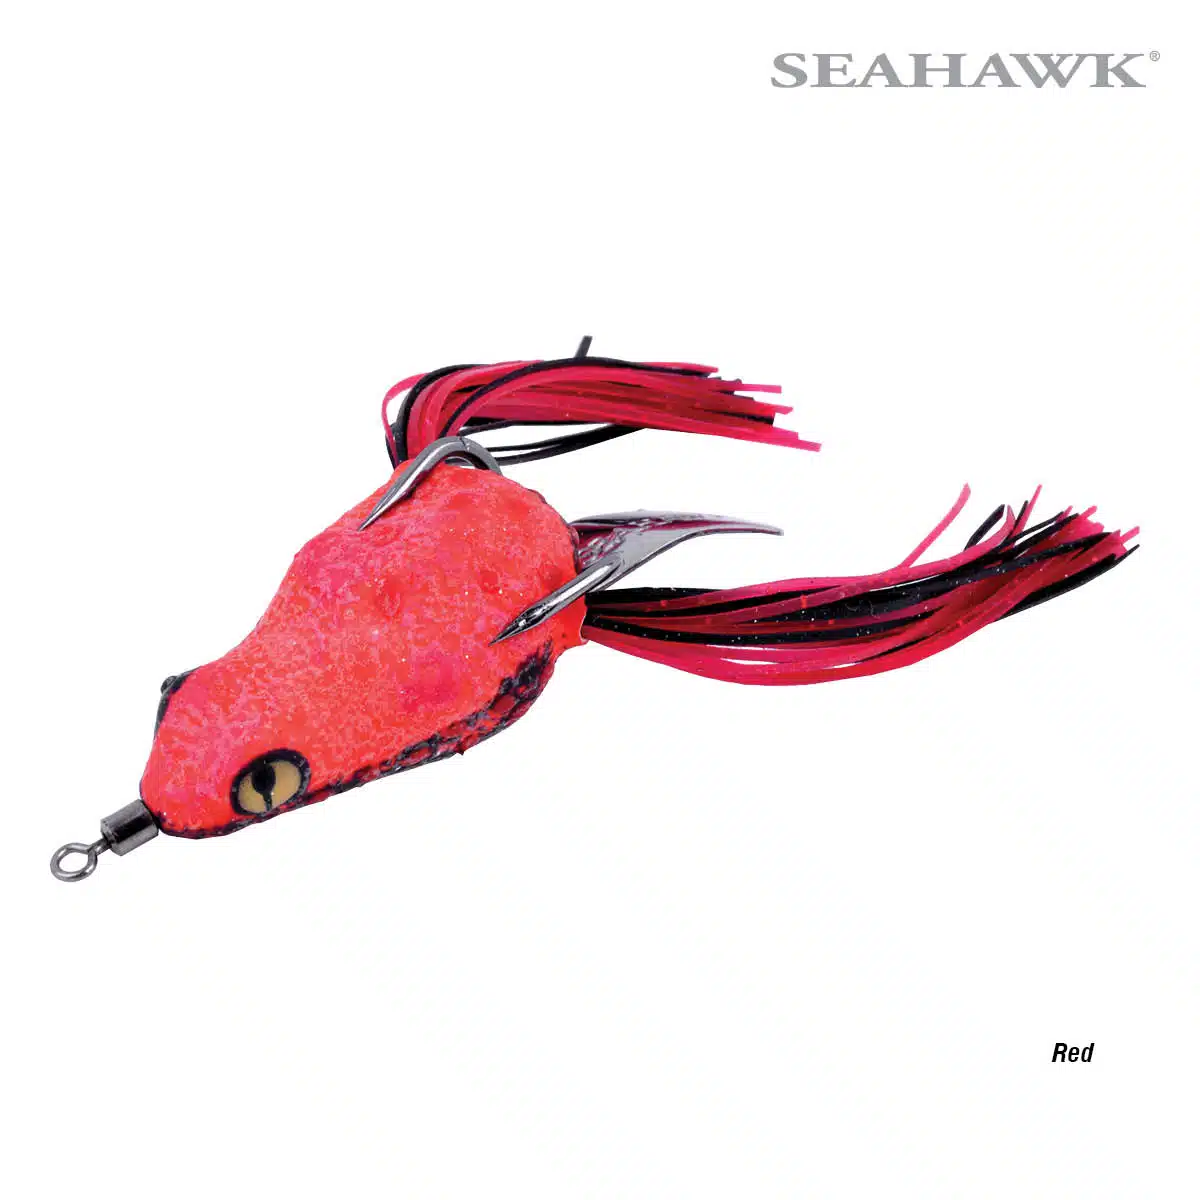 Seahawk Arrow Frog 40 Red